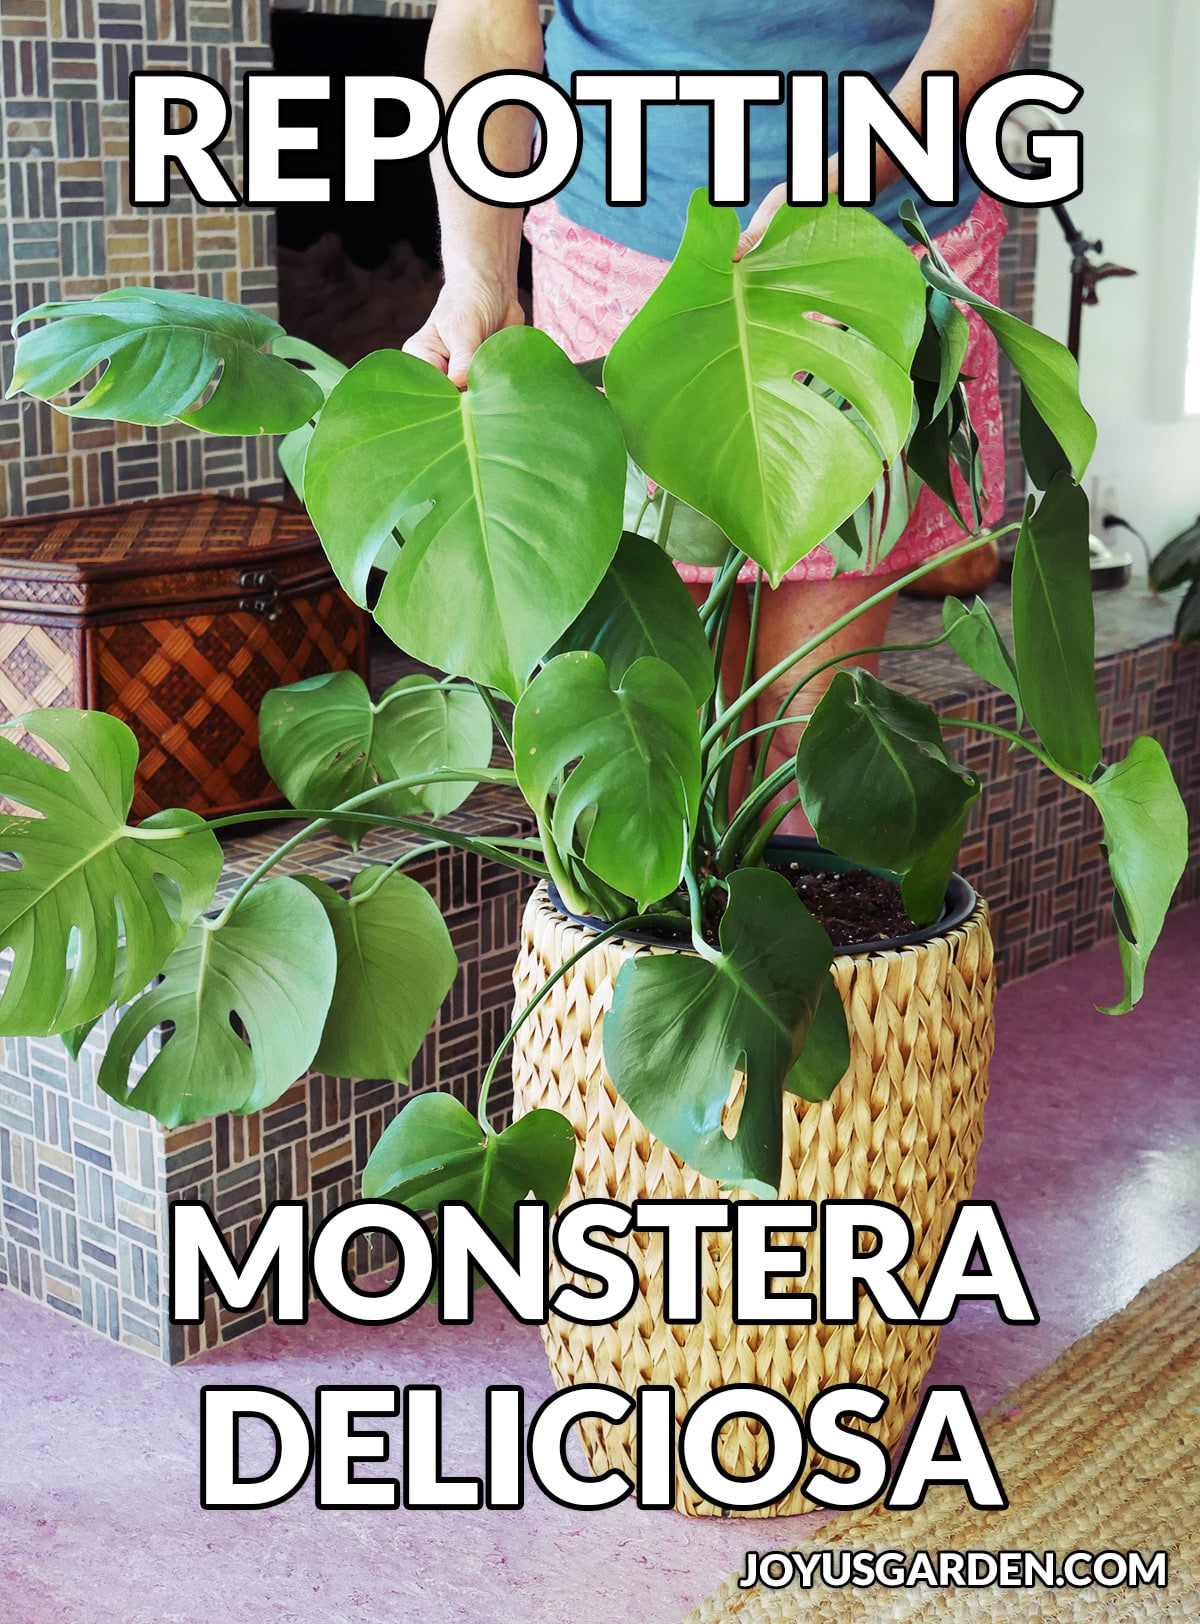  Repotting Monstera Deliciosa: چگونه این کار را انجام دهیم. مخلوط برای استفاده